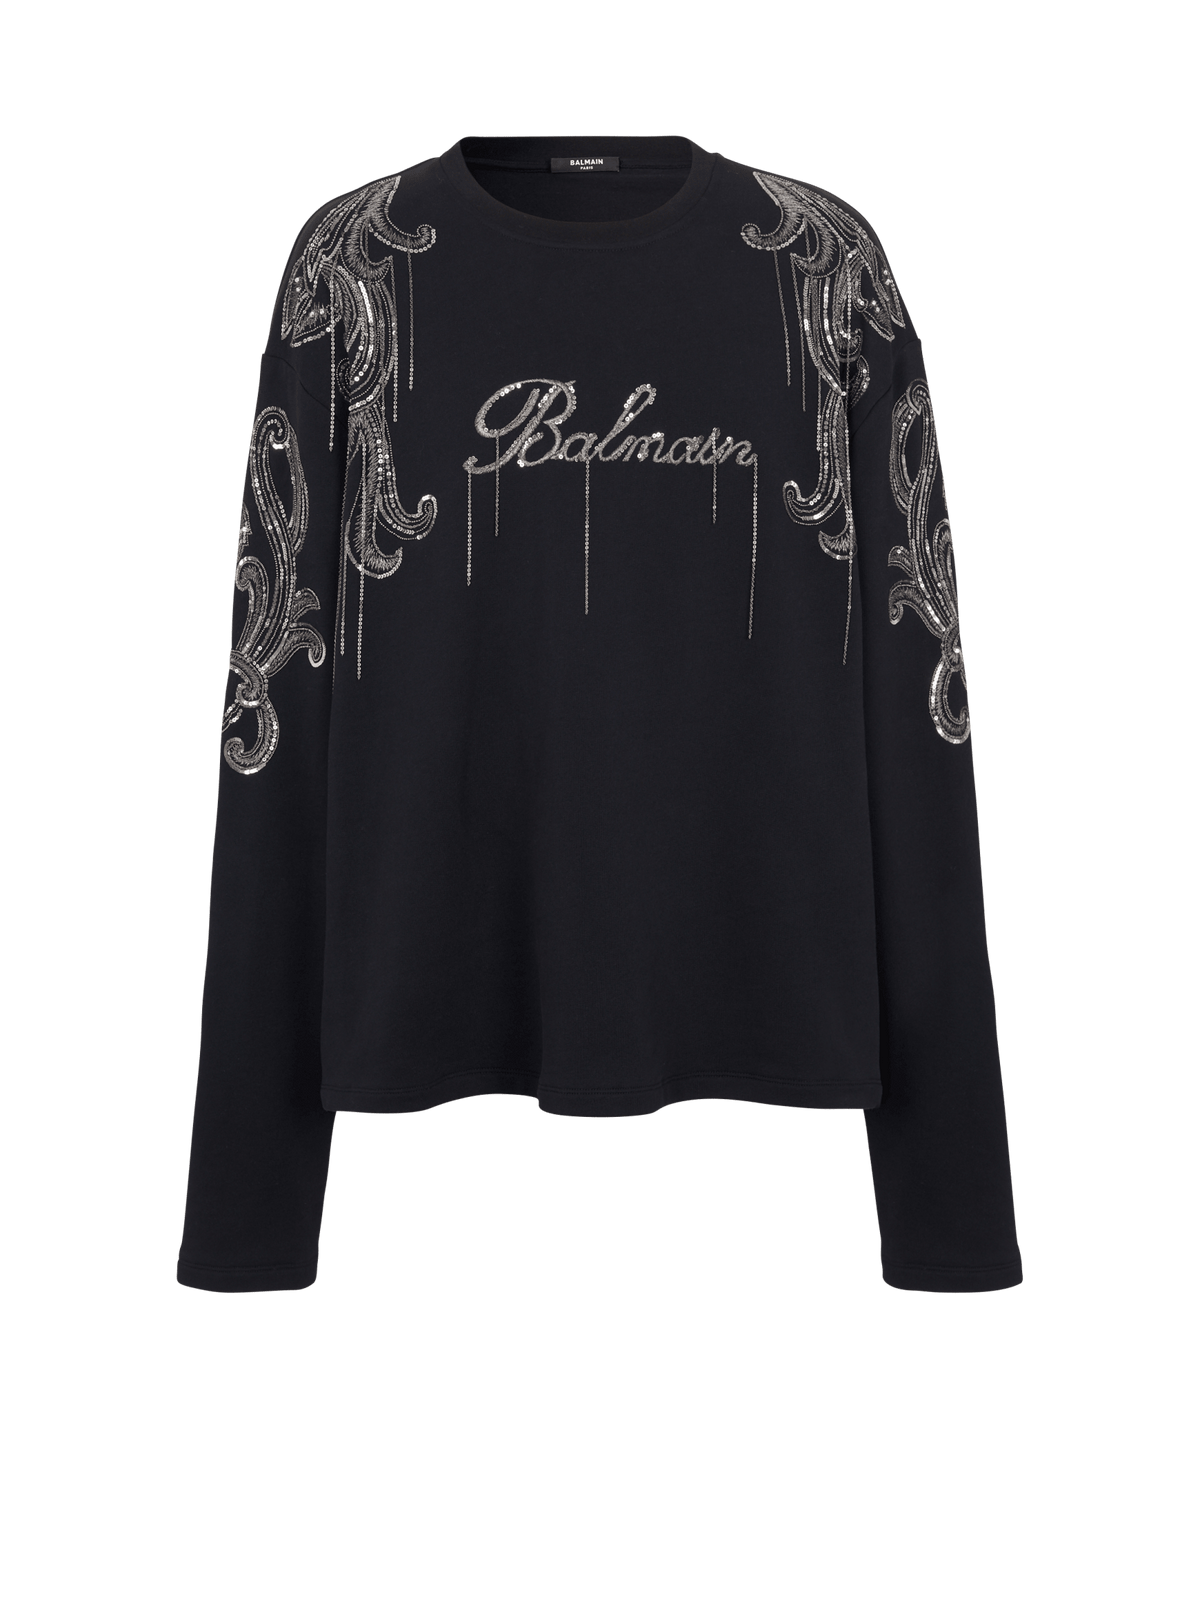 Balmain Signature chain embroidered sweater